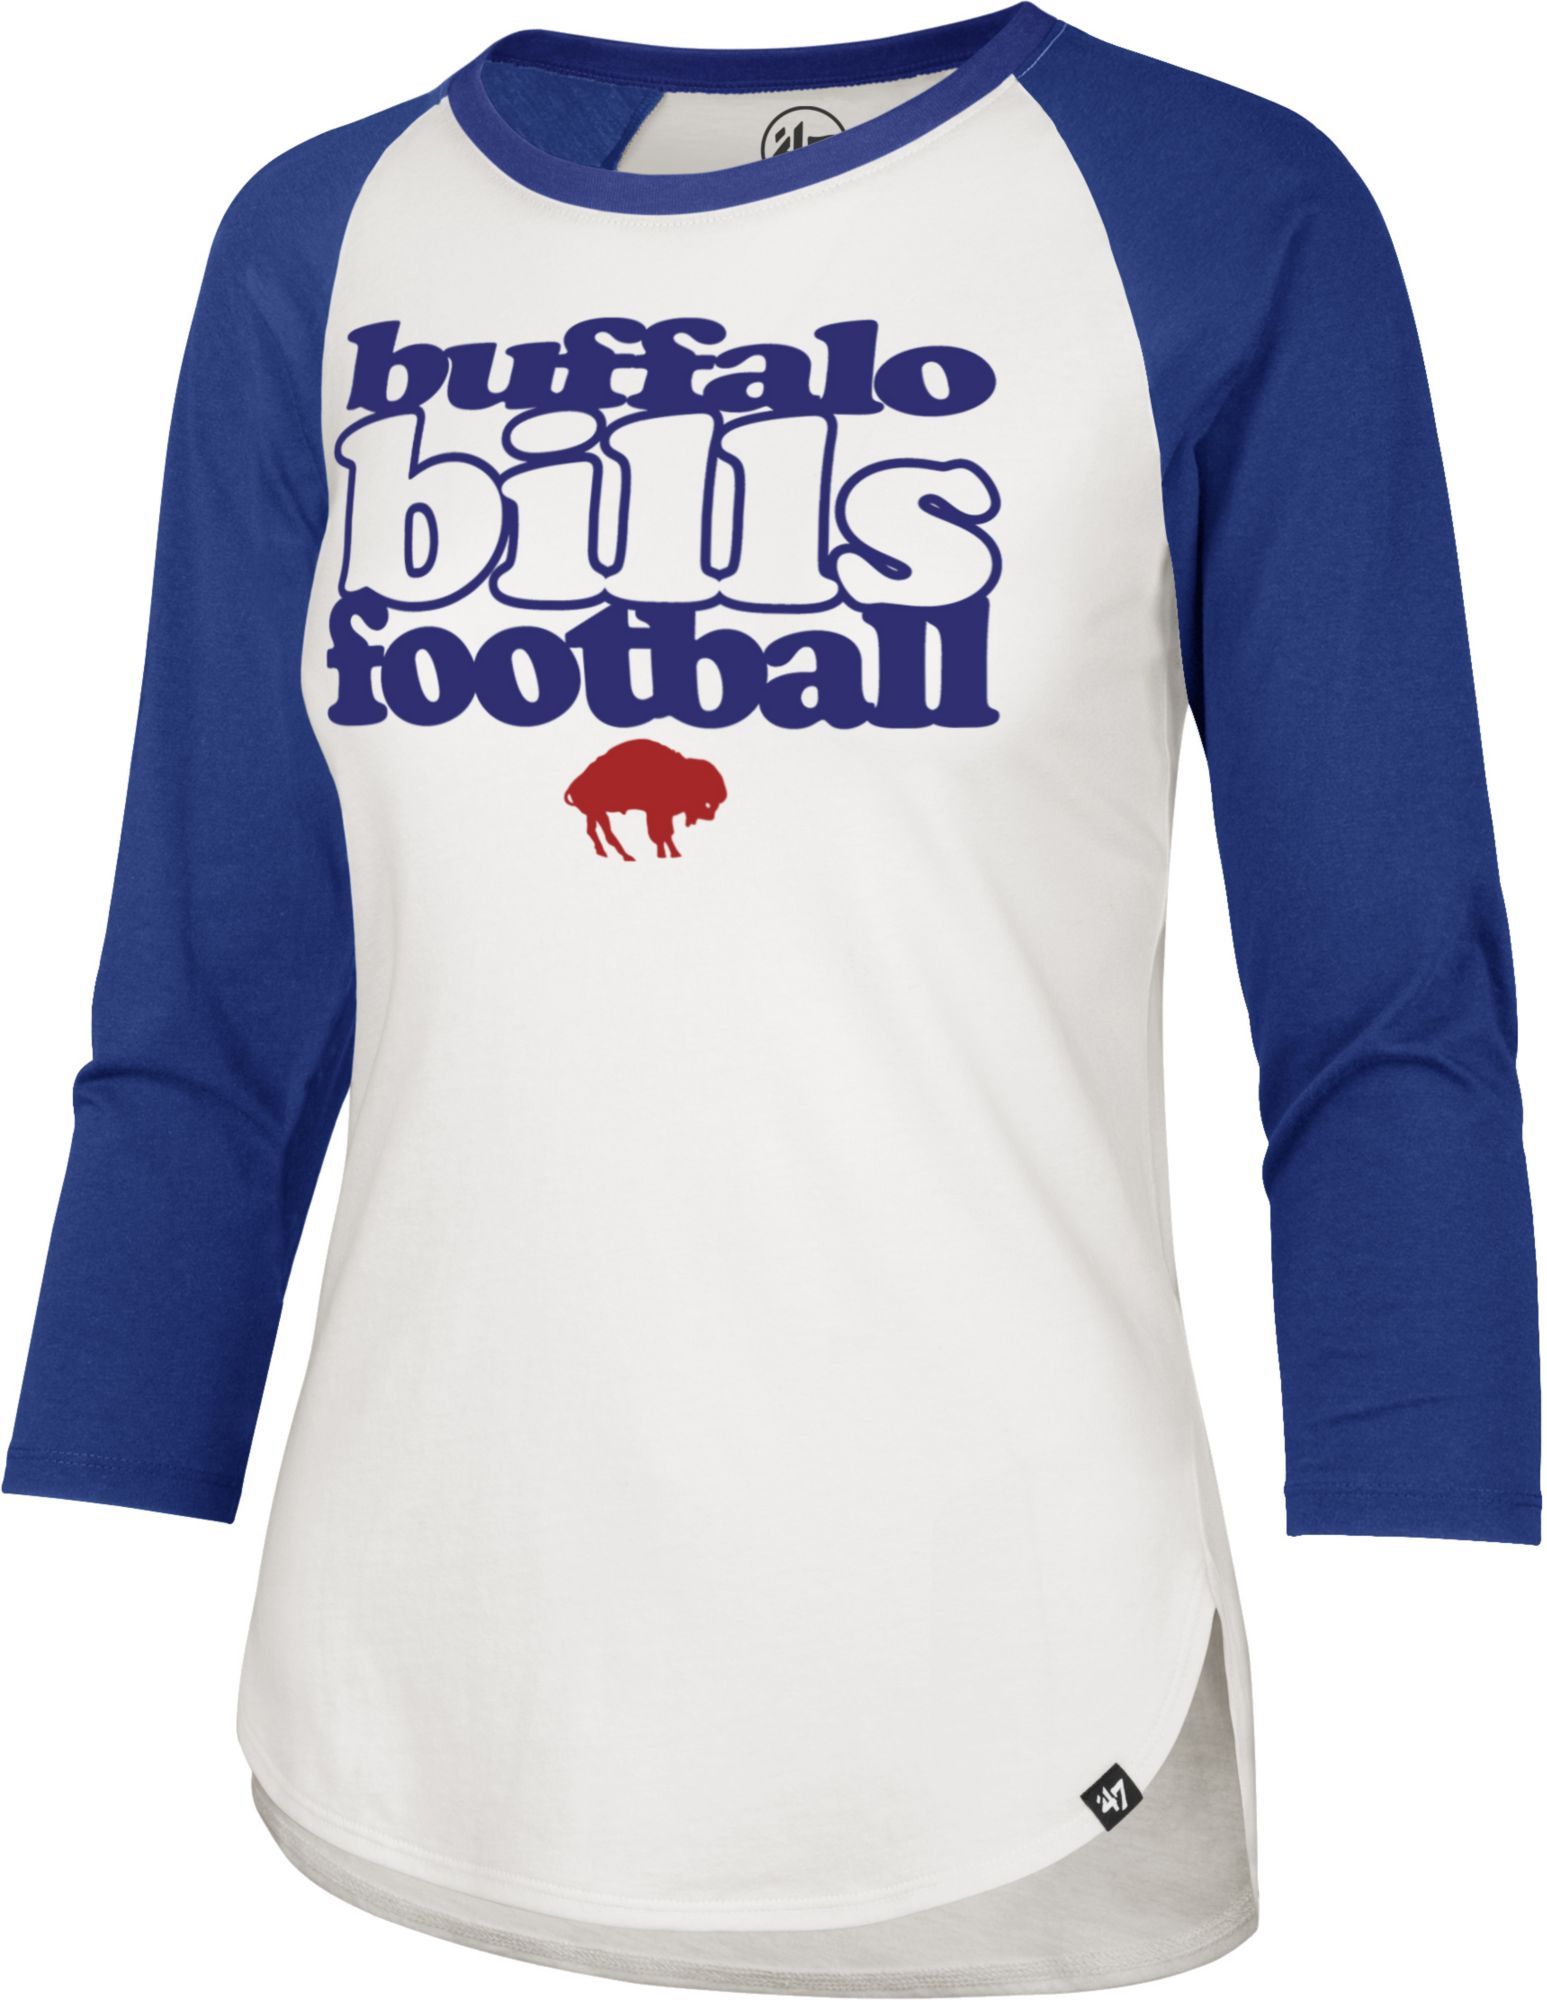 womens buffalo bills shirts